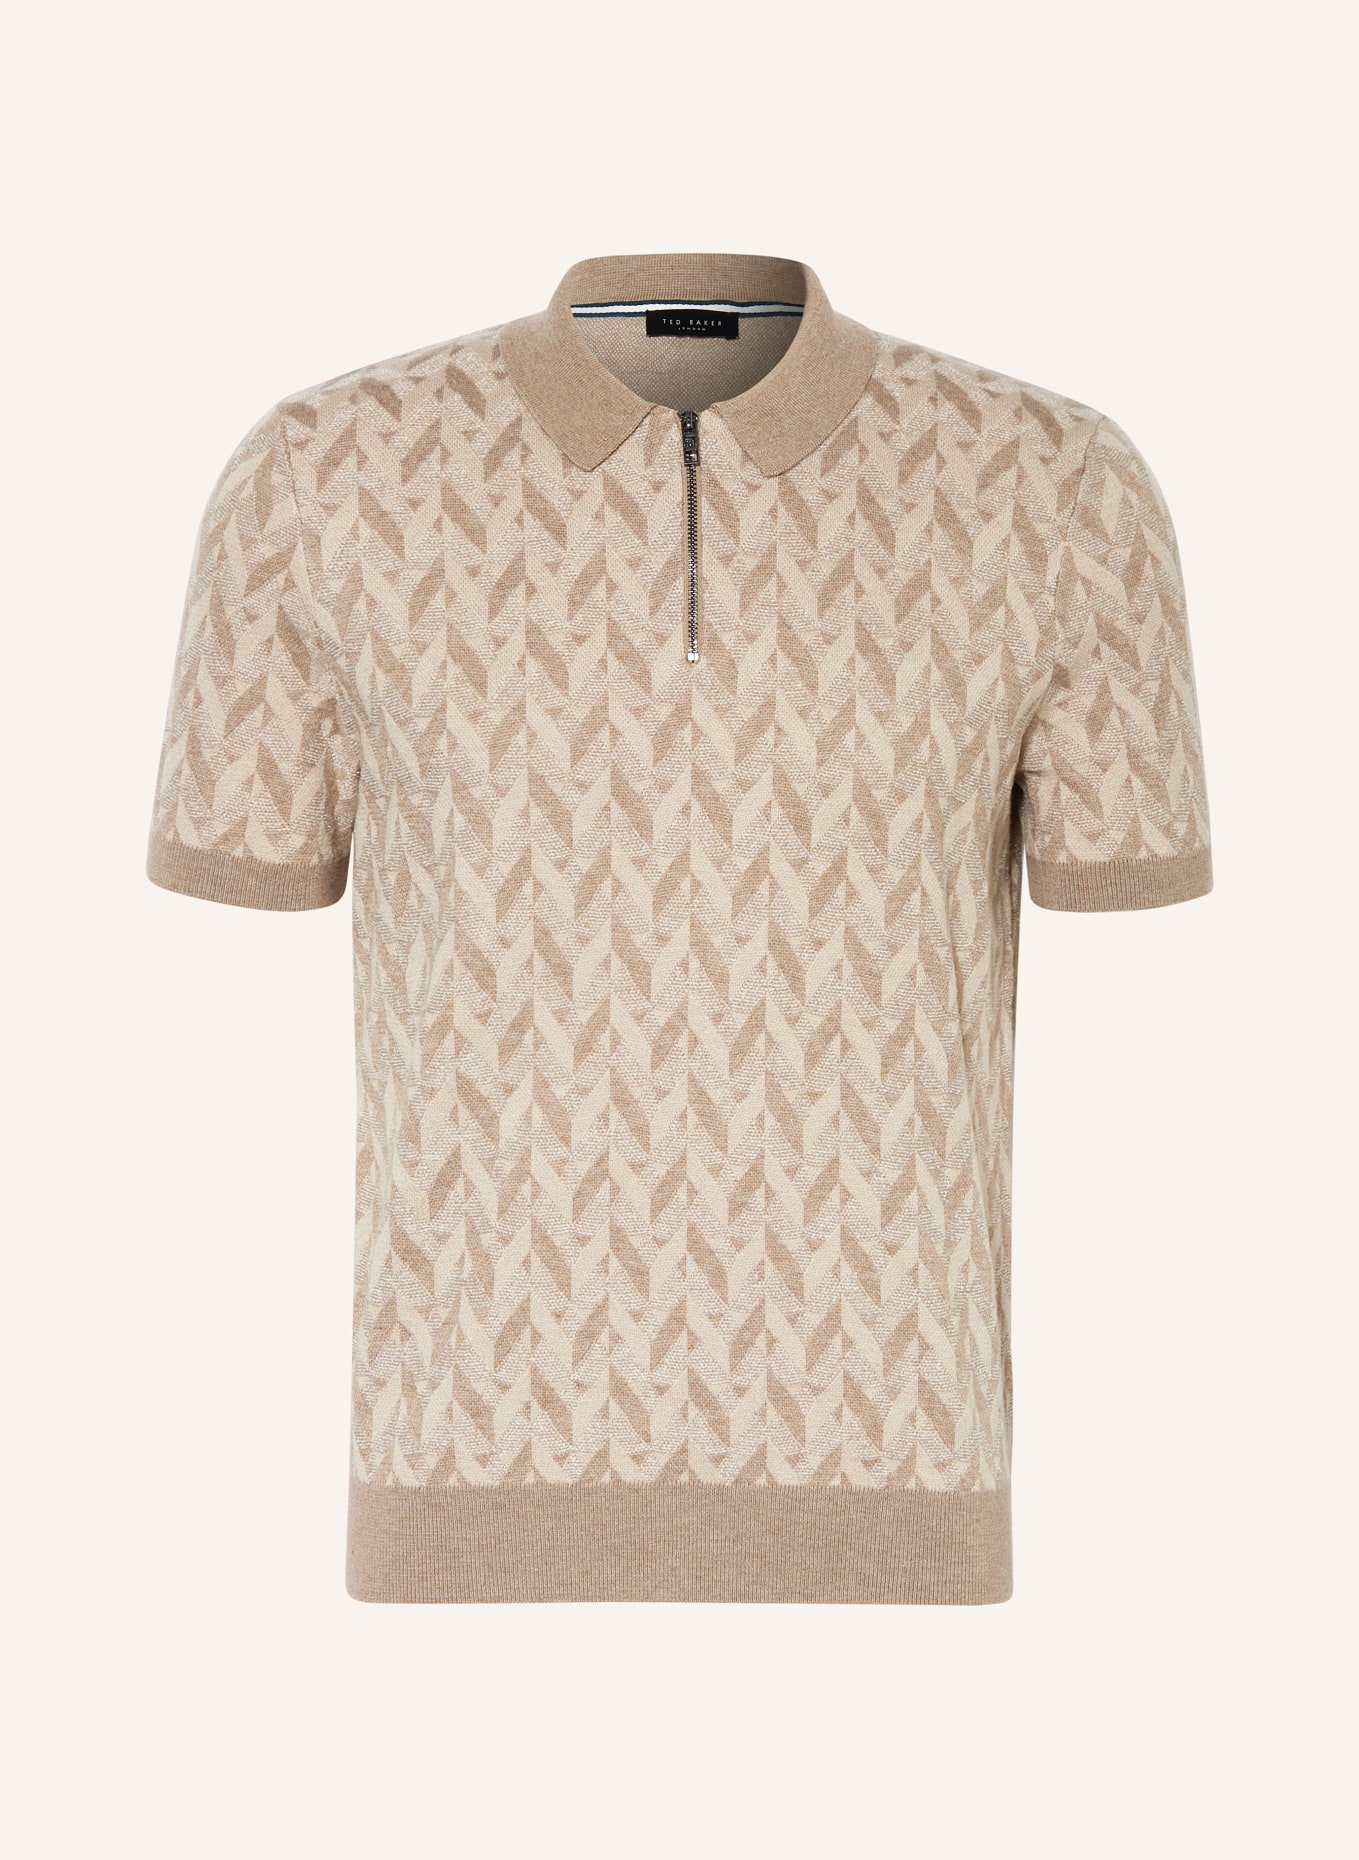 TED BAKER Strick-Poloshirt MITFORD, Farbe: NUDE/ WEISS/ BEIGE (Bild 1)